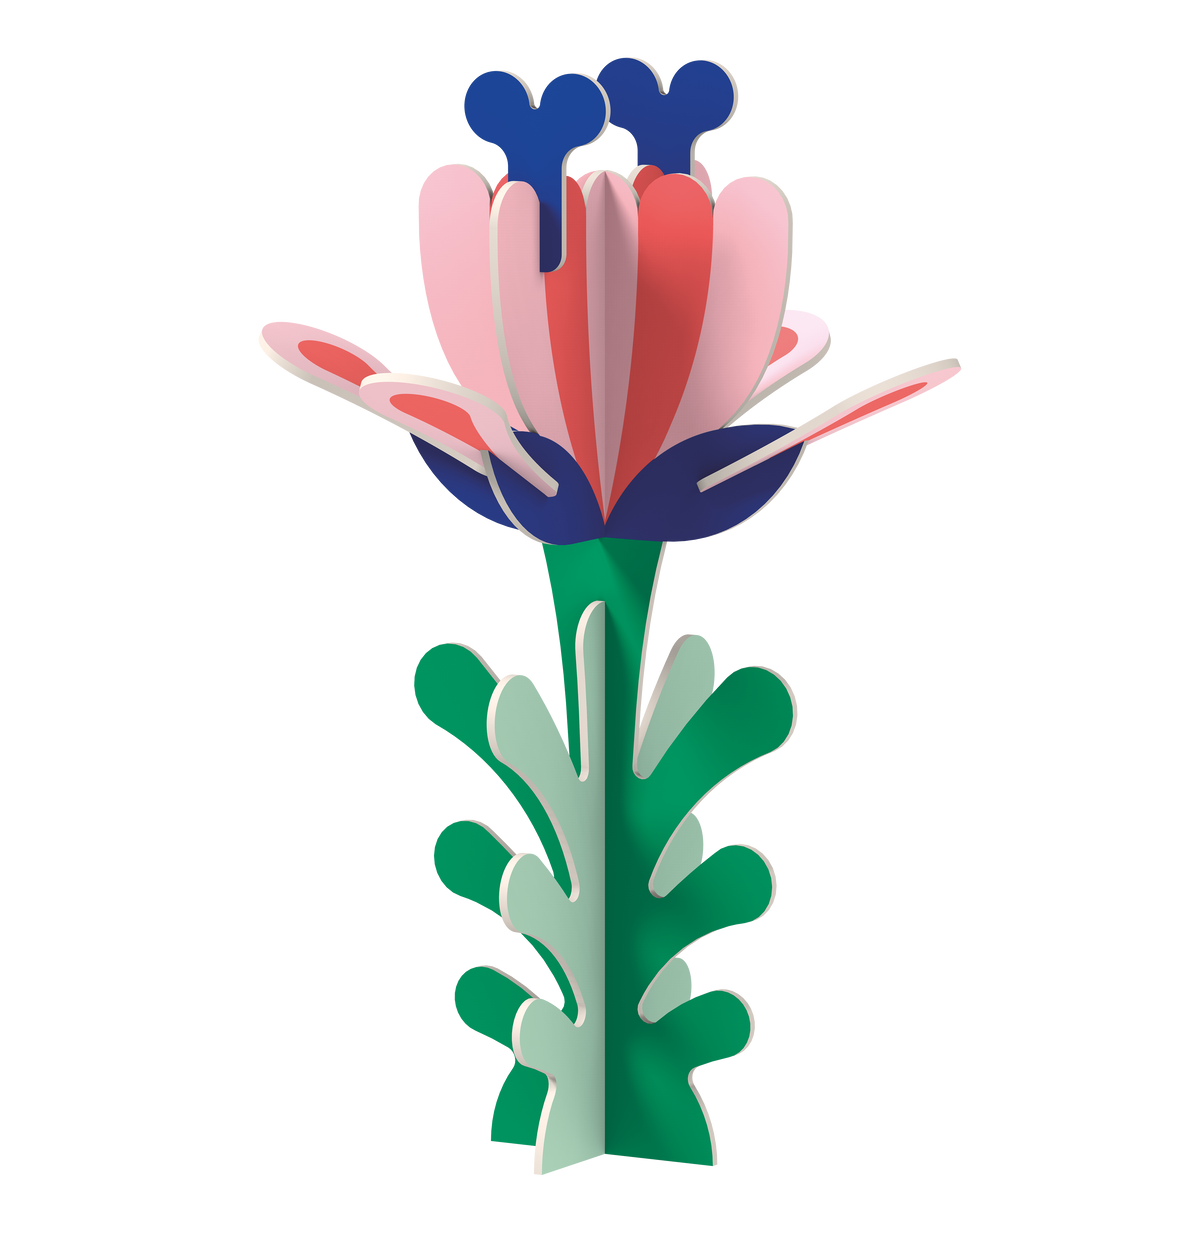 Octaevo Elysian Flower Paper Sculpture 1